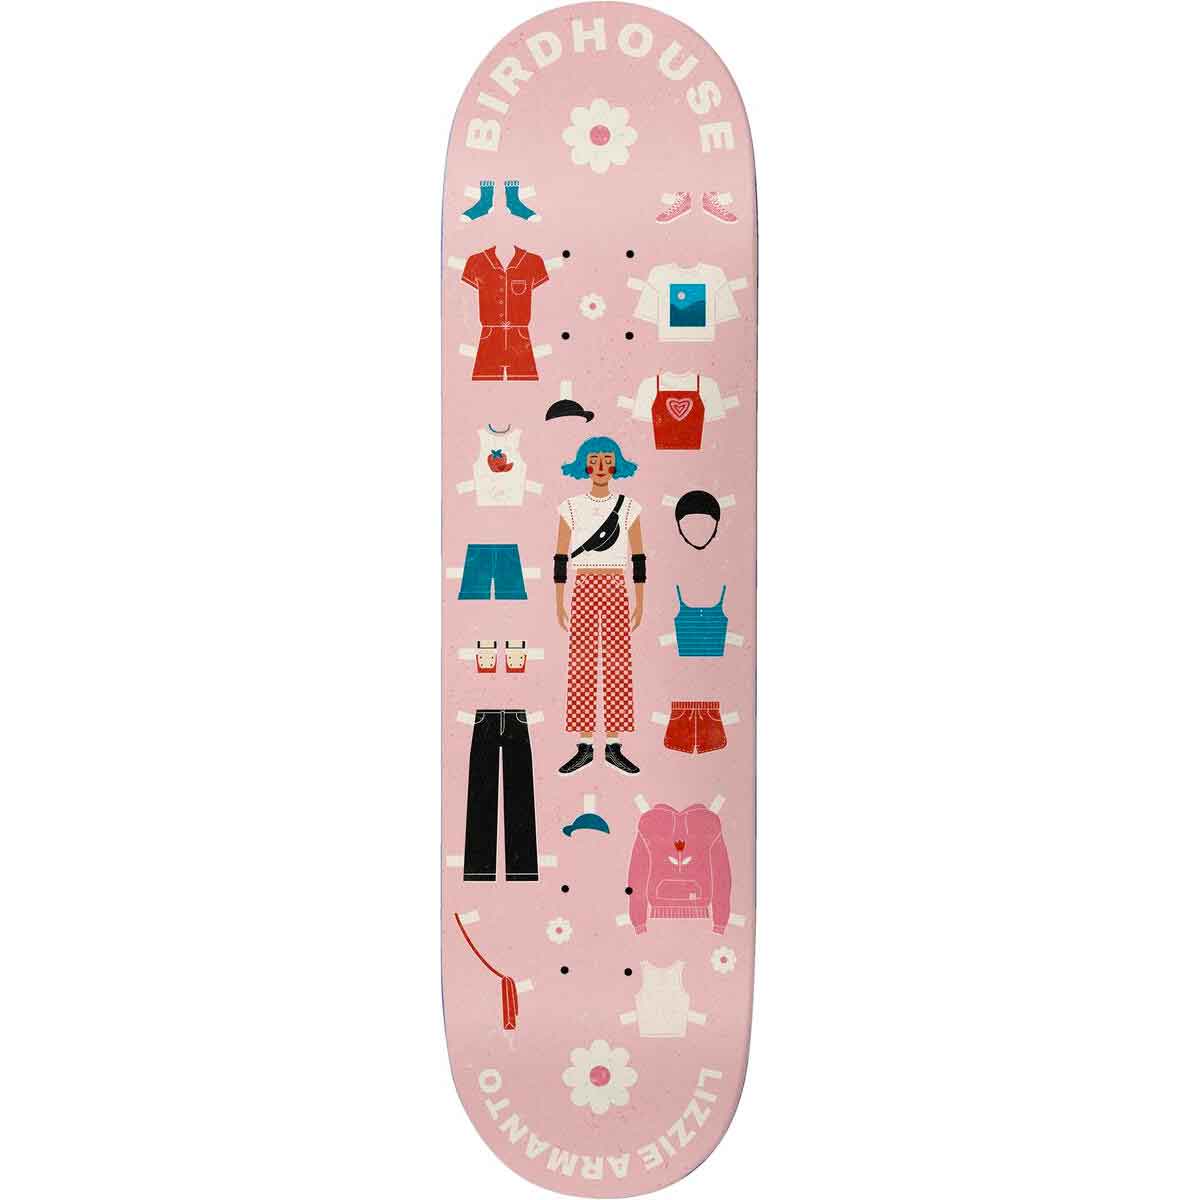 Lizzie Armanto Paper Dolls Pro Skateboard Deck 8.0